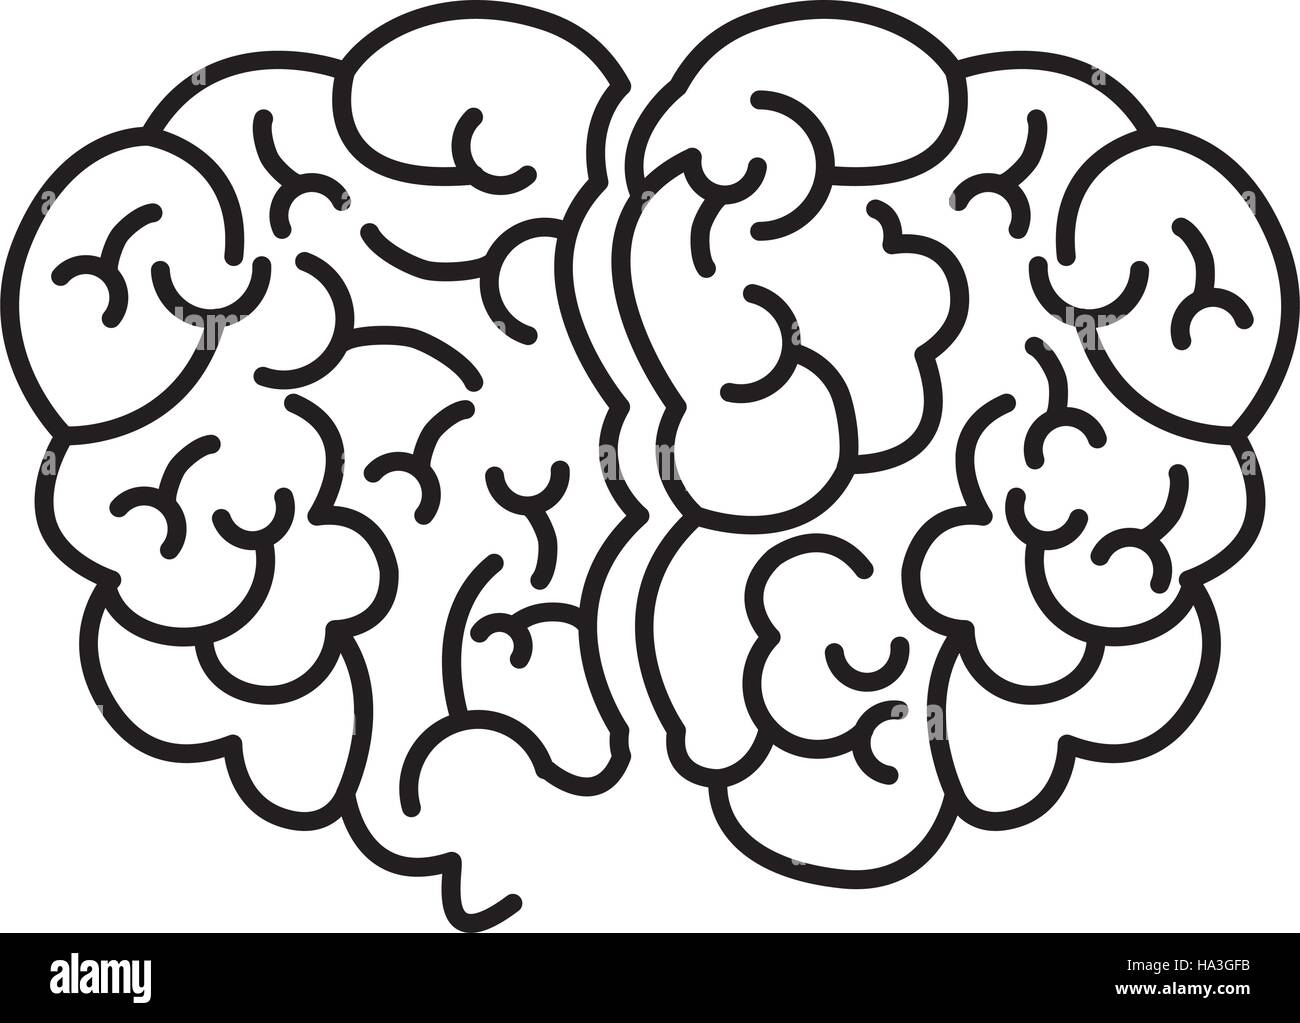 silhouette brain human top view vector illustration Stock Vector